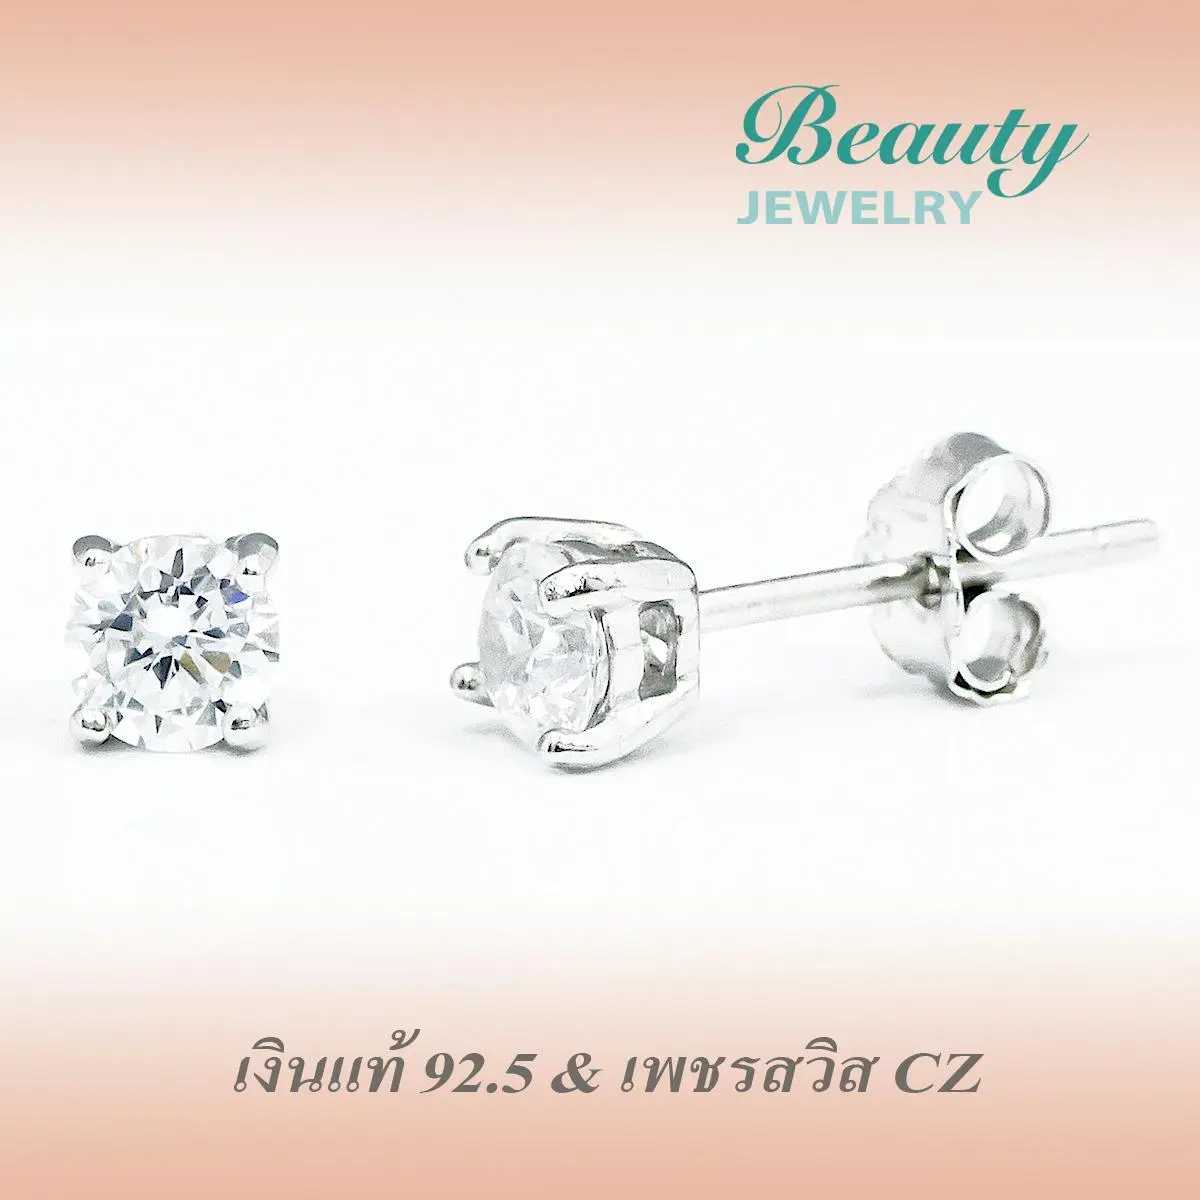 Beauty Jewelry เครื่องประดับผู้หญิง ต่างหูเพชร CZ เม็ดเดี่ยว เงินแท้ 92.5 sterling slver ประดับเพชรสวิส CZ ขนาด 4MM รุ่น ES2024-4W เคลือบทองคำขาว